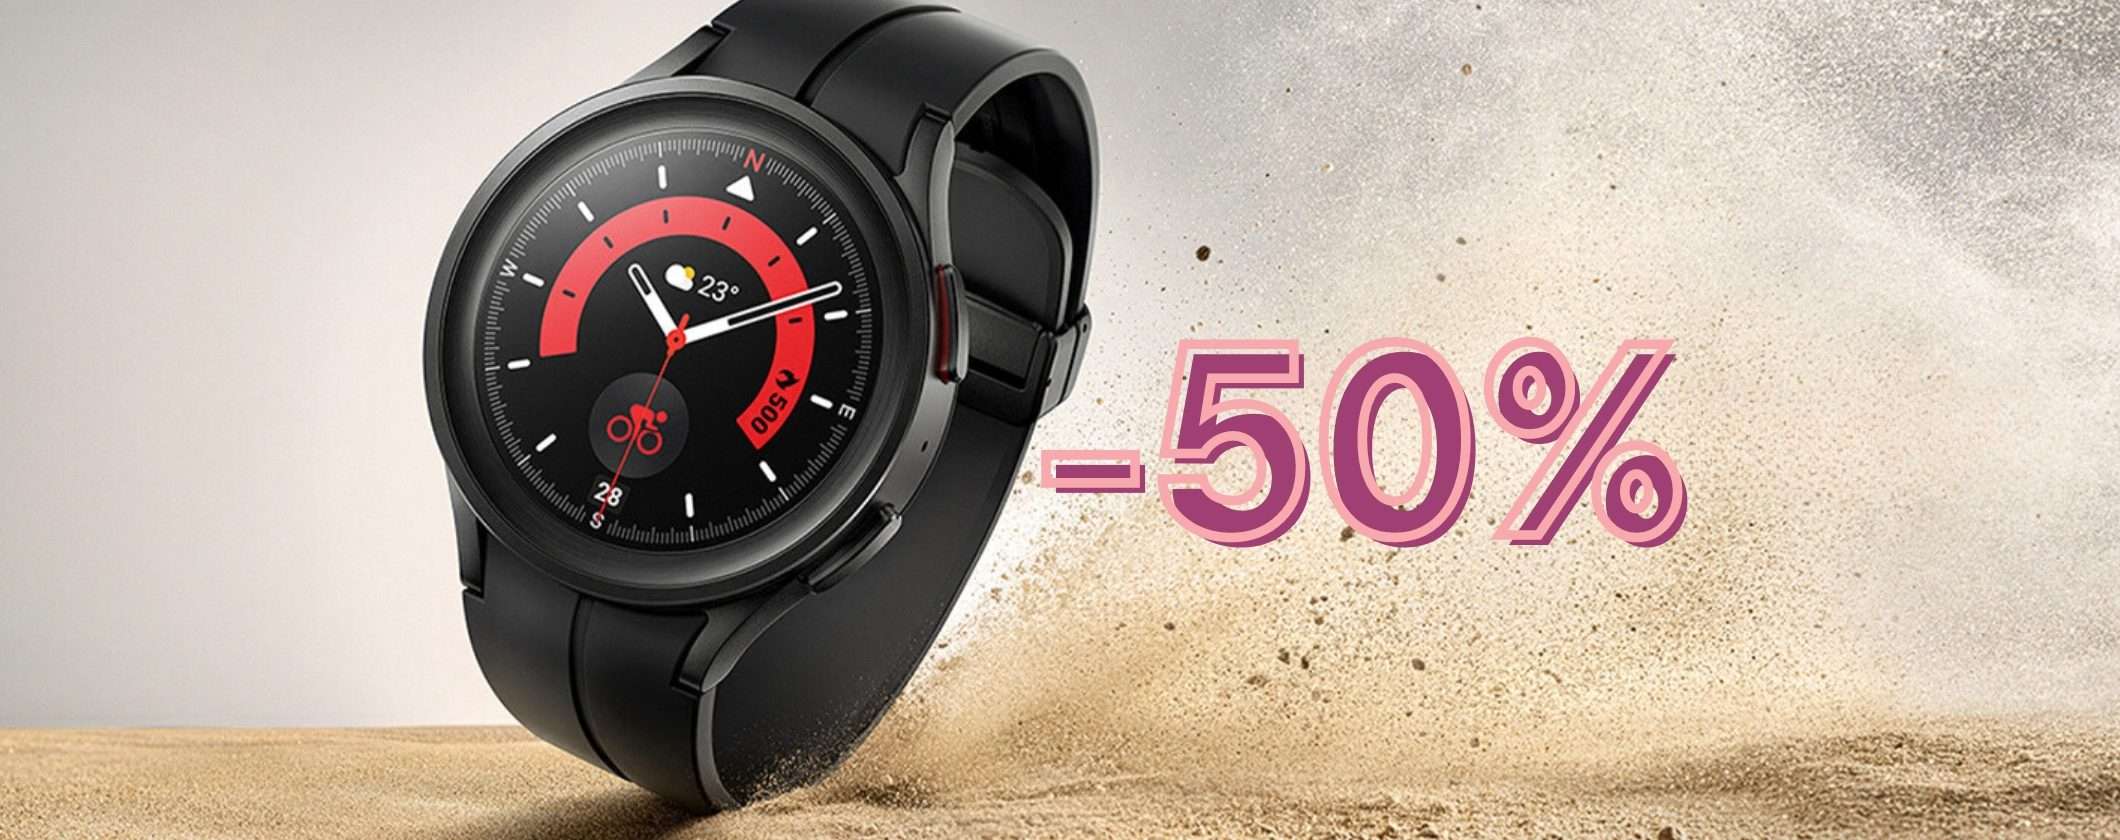 Samsung Galaxy Watch5 Pro CROLLA al 50% su Amazon